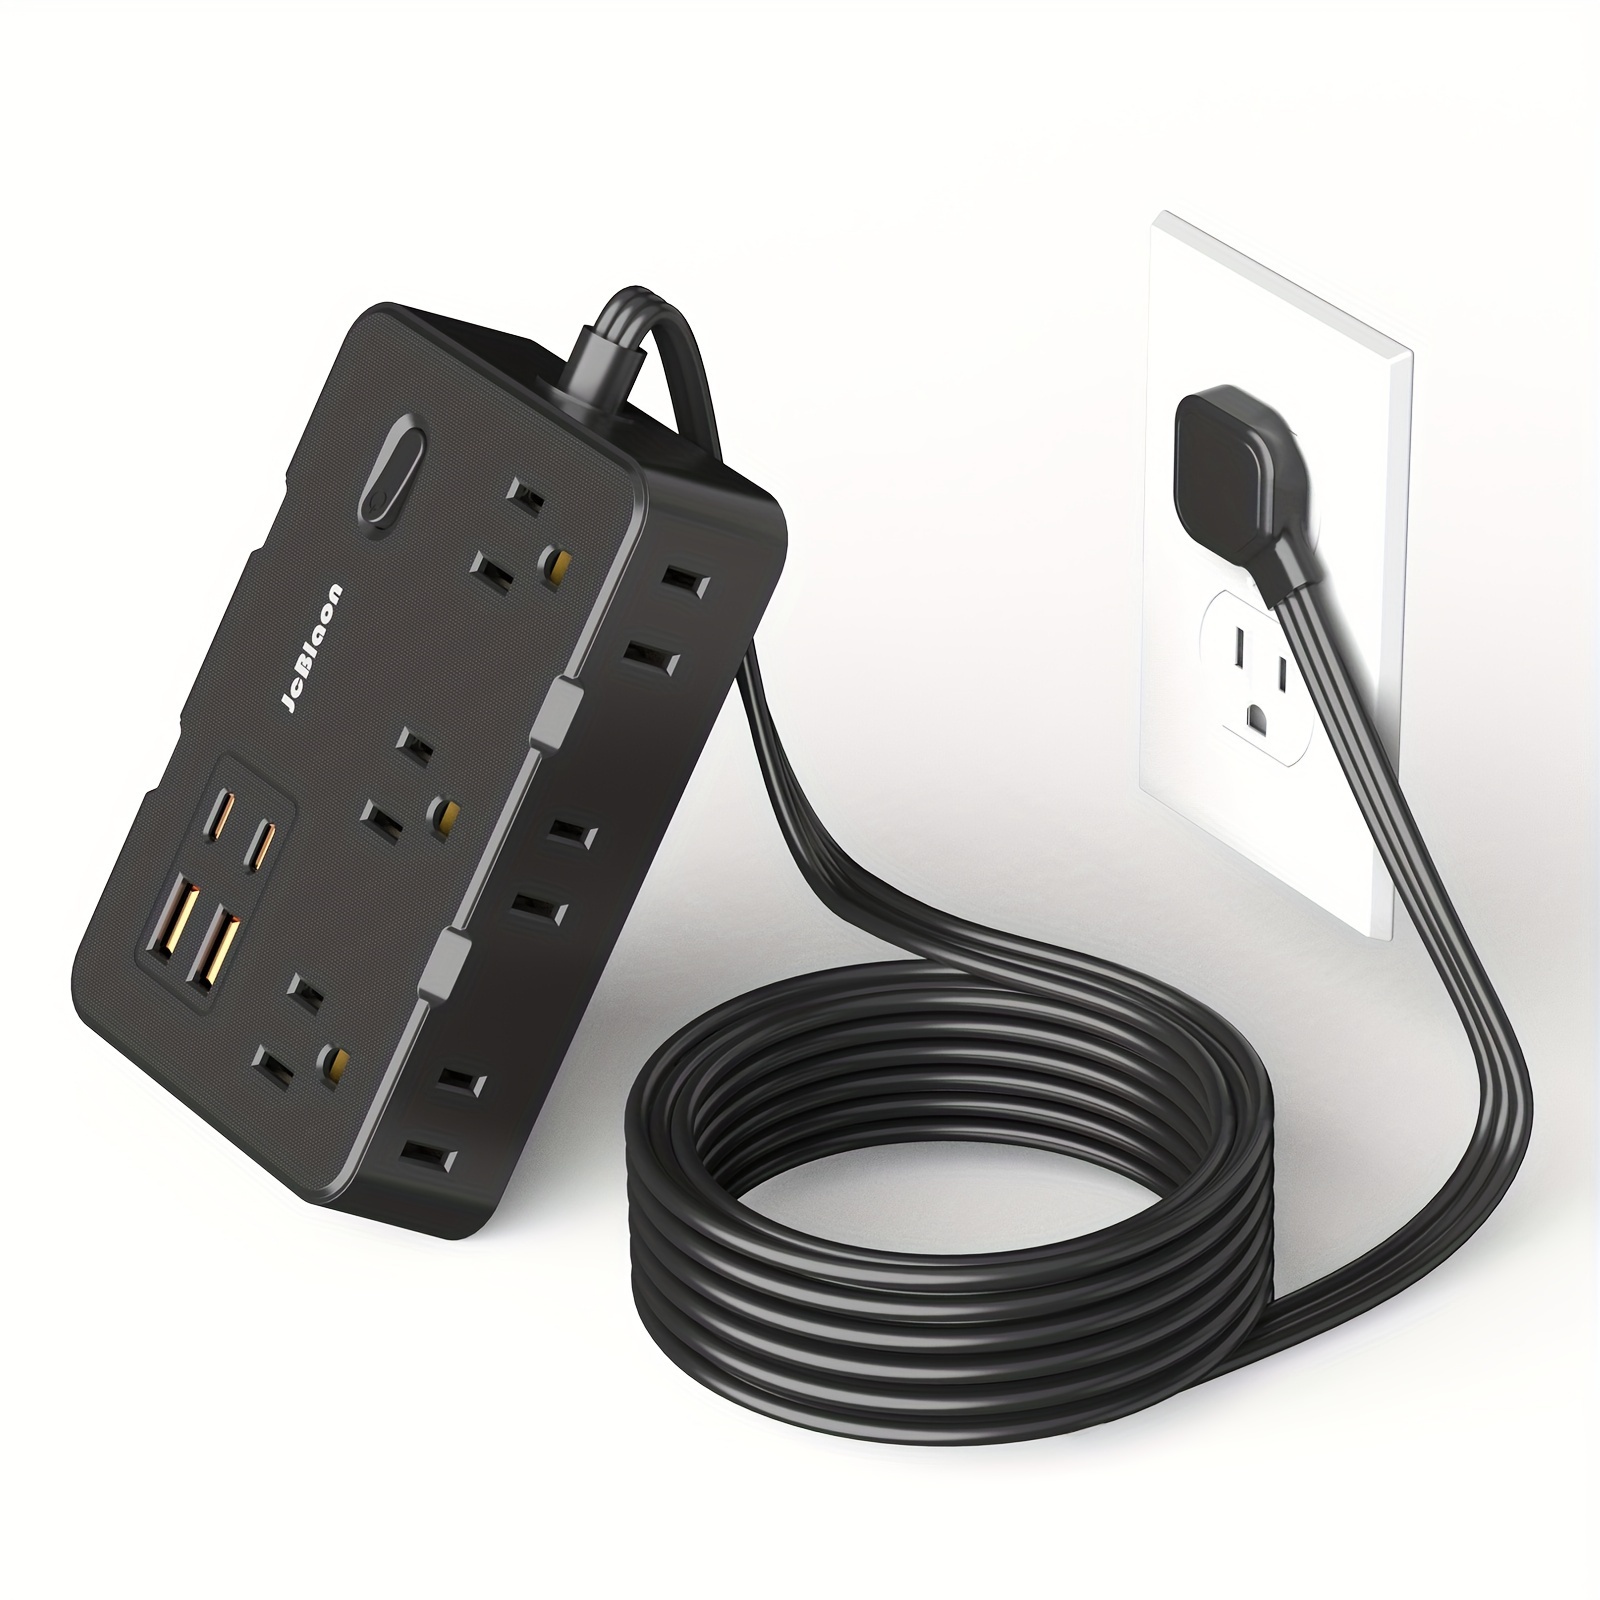 Regleta de alimentación empotrada de mesa con 3 salidas de CA+2 puertos de  cargador USB, enchufe de enchufes empotrados de escritorio con cable de